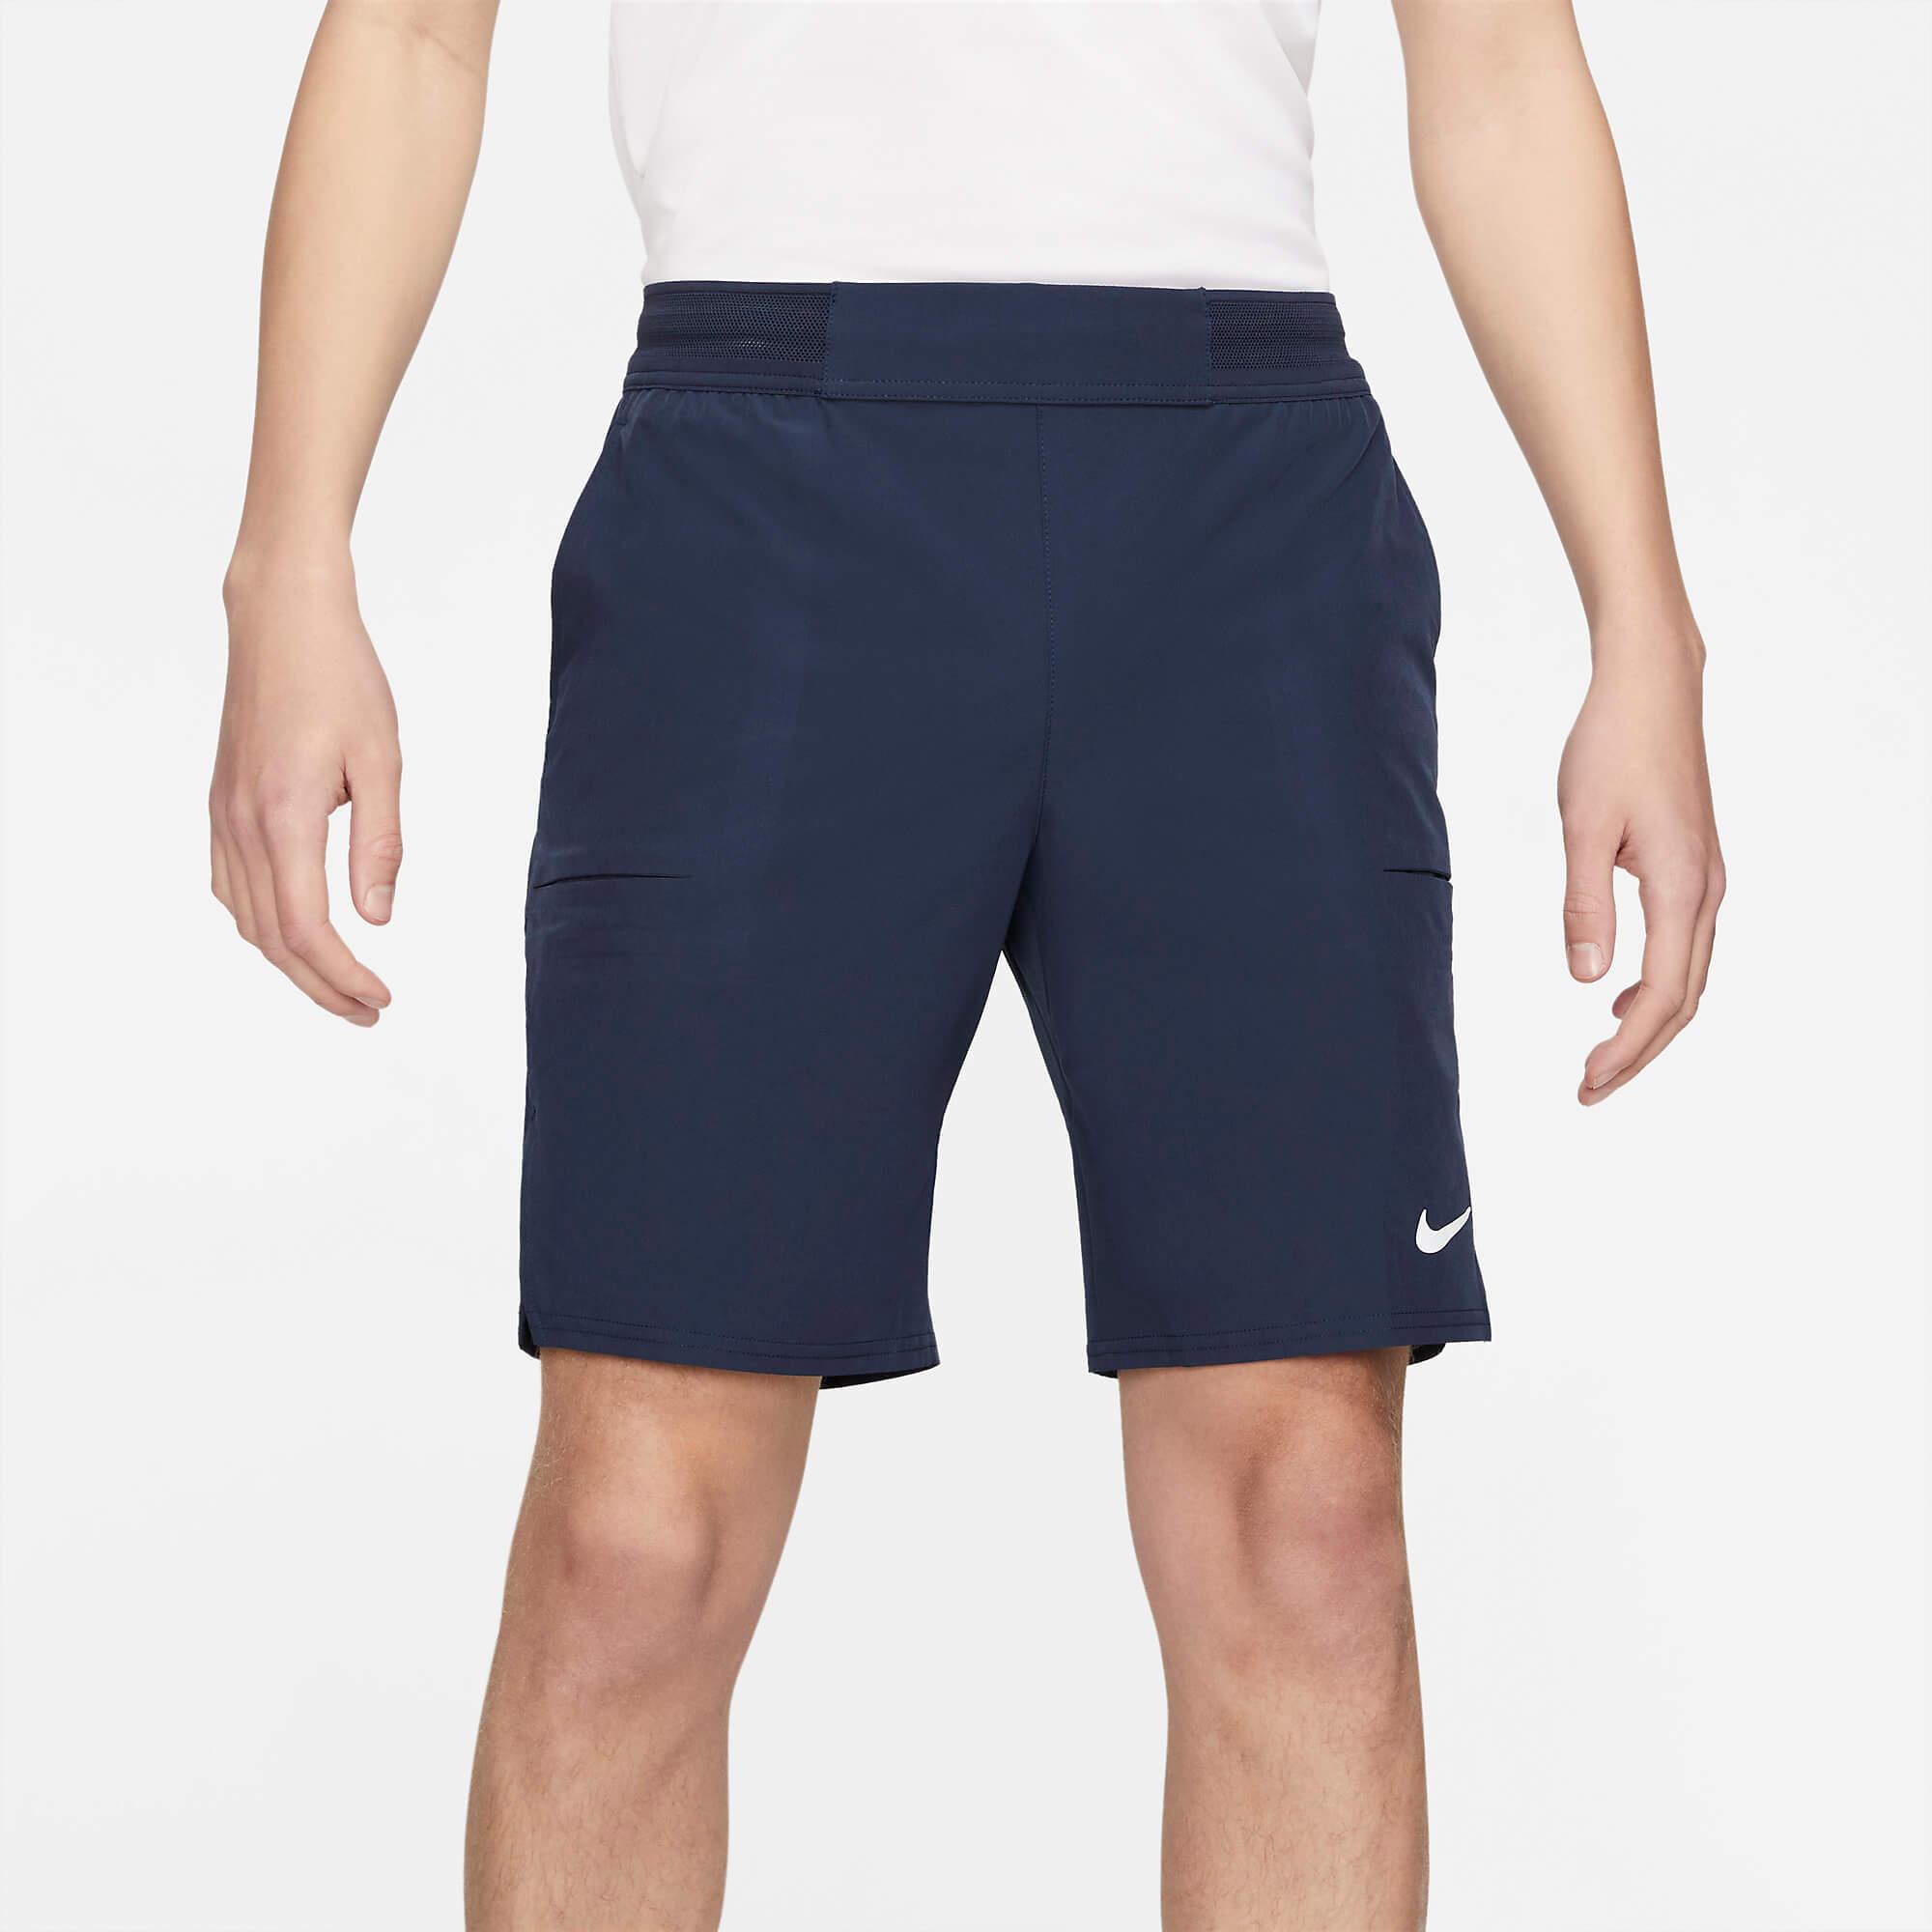 Nike Mens Advantage 9 Inch Tennis Shorts - Navy Blue - Tennisnuts.com